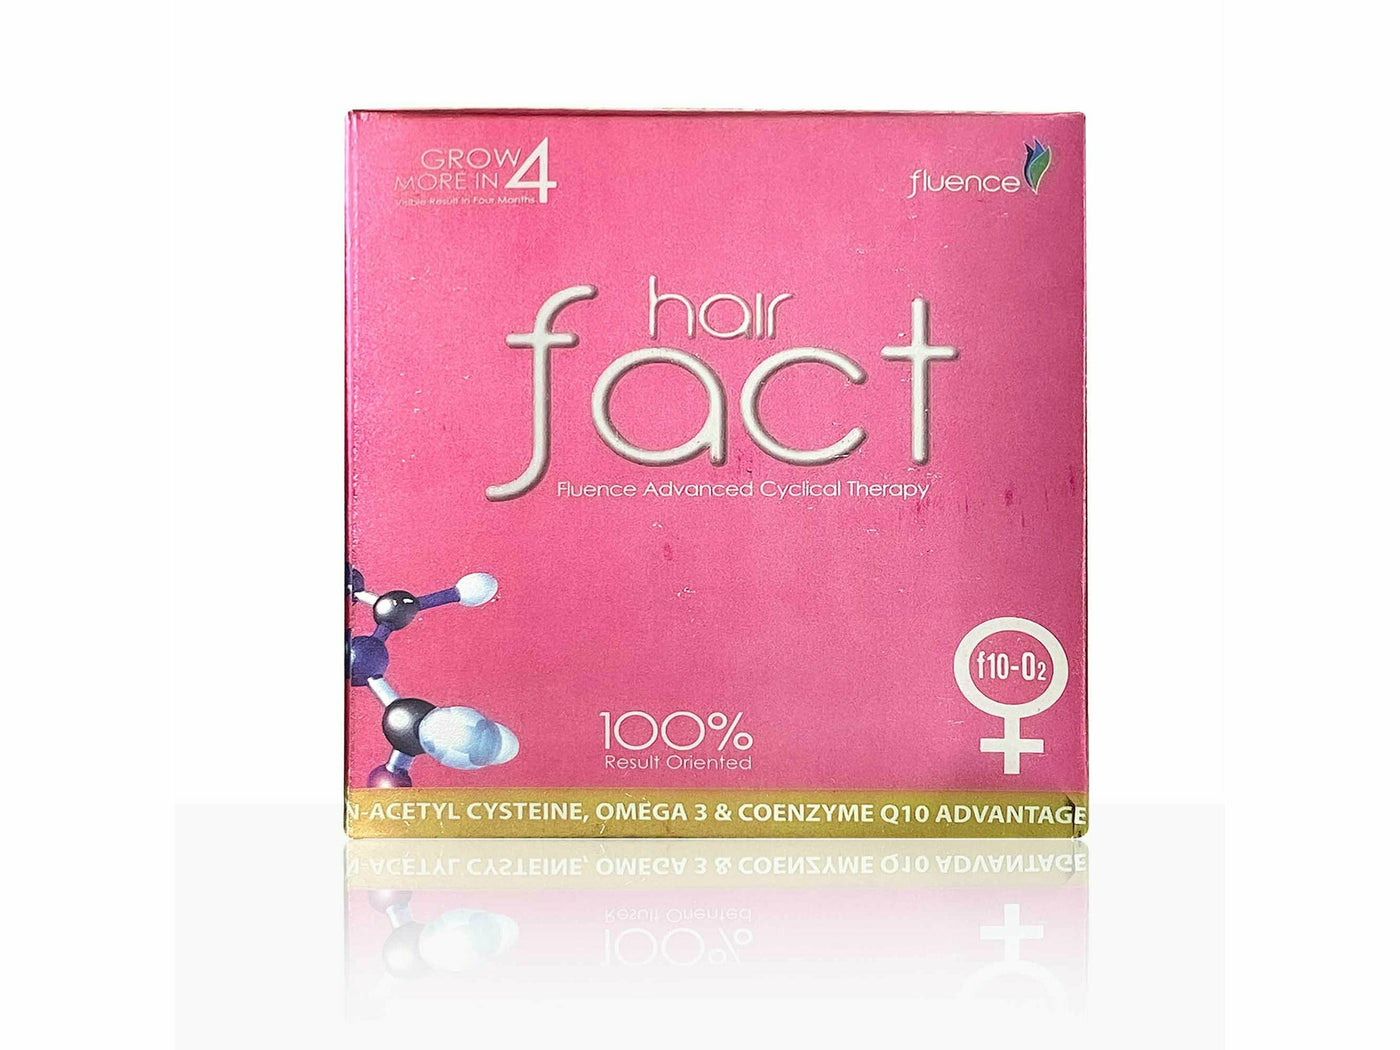 Hair Fact Fluence Advanced Cyclical Therapy (Women) F10-O2